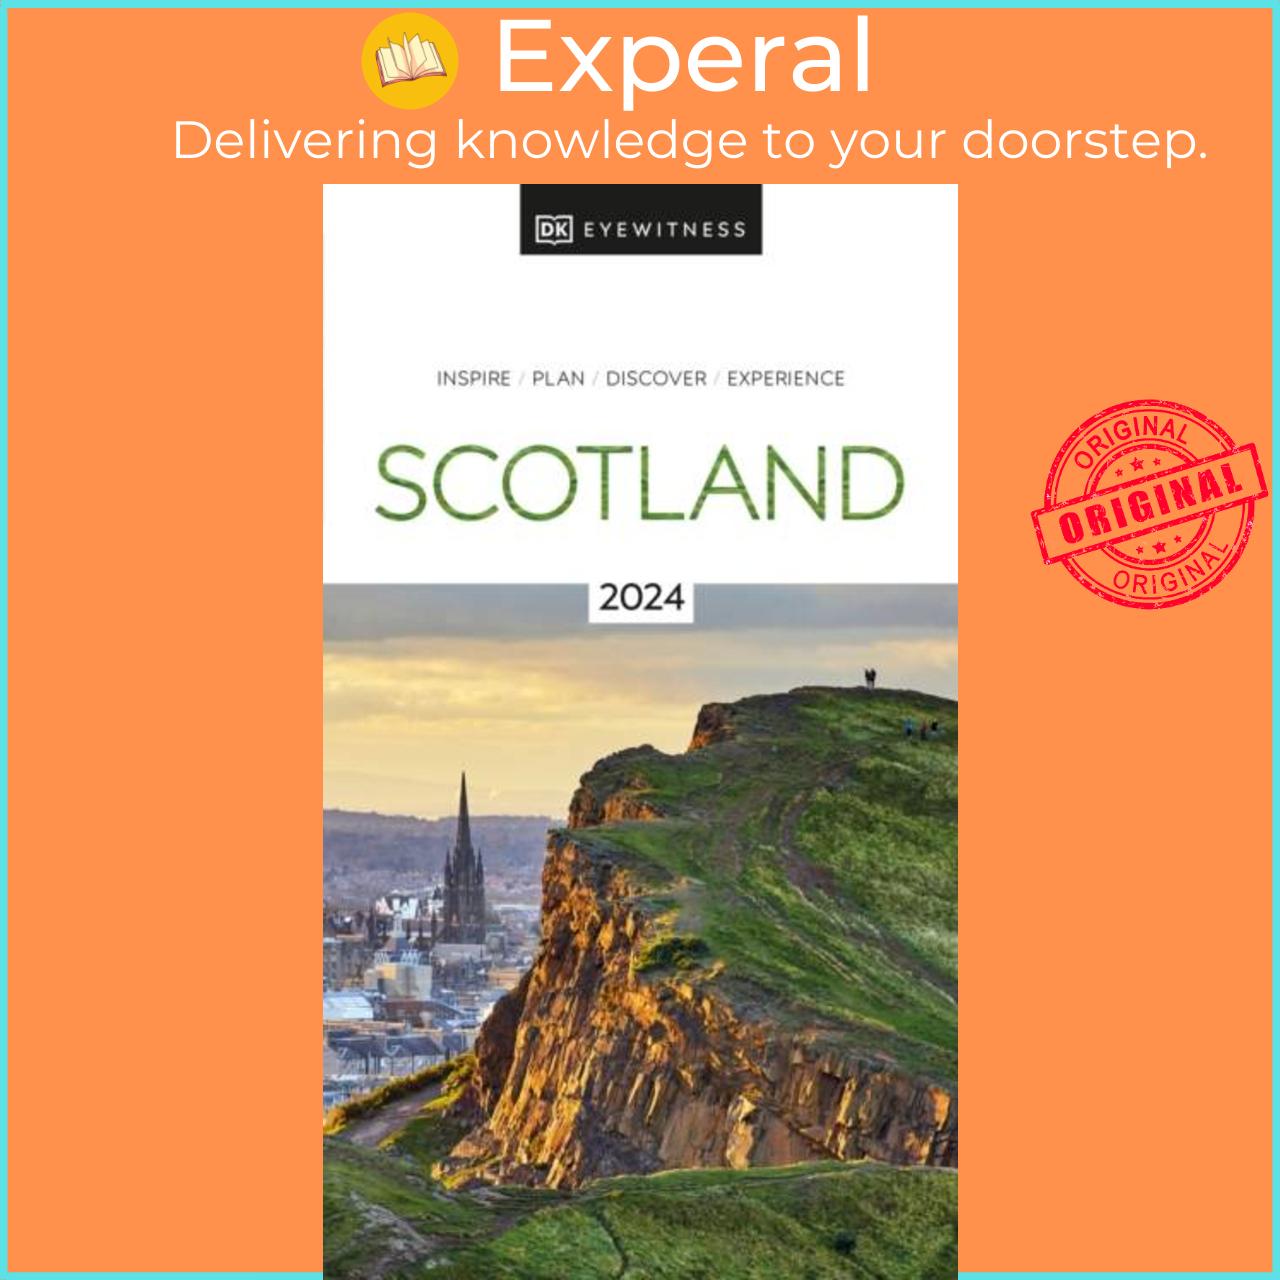 Sách - DK Eyewitness Scotland by DK Eyewitness (UK edition, paperback)